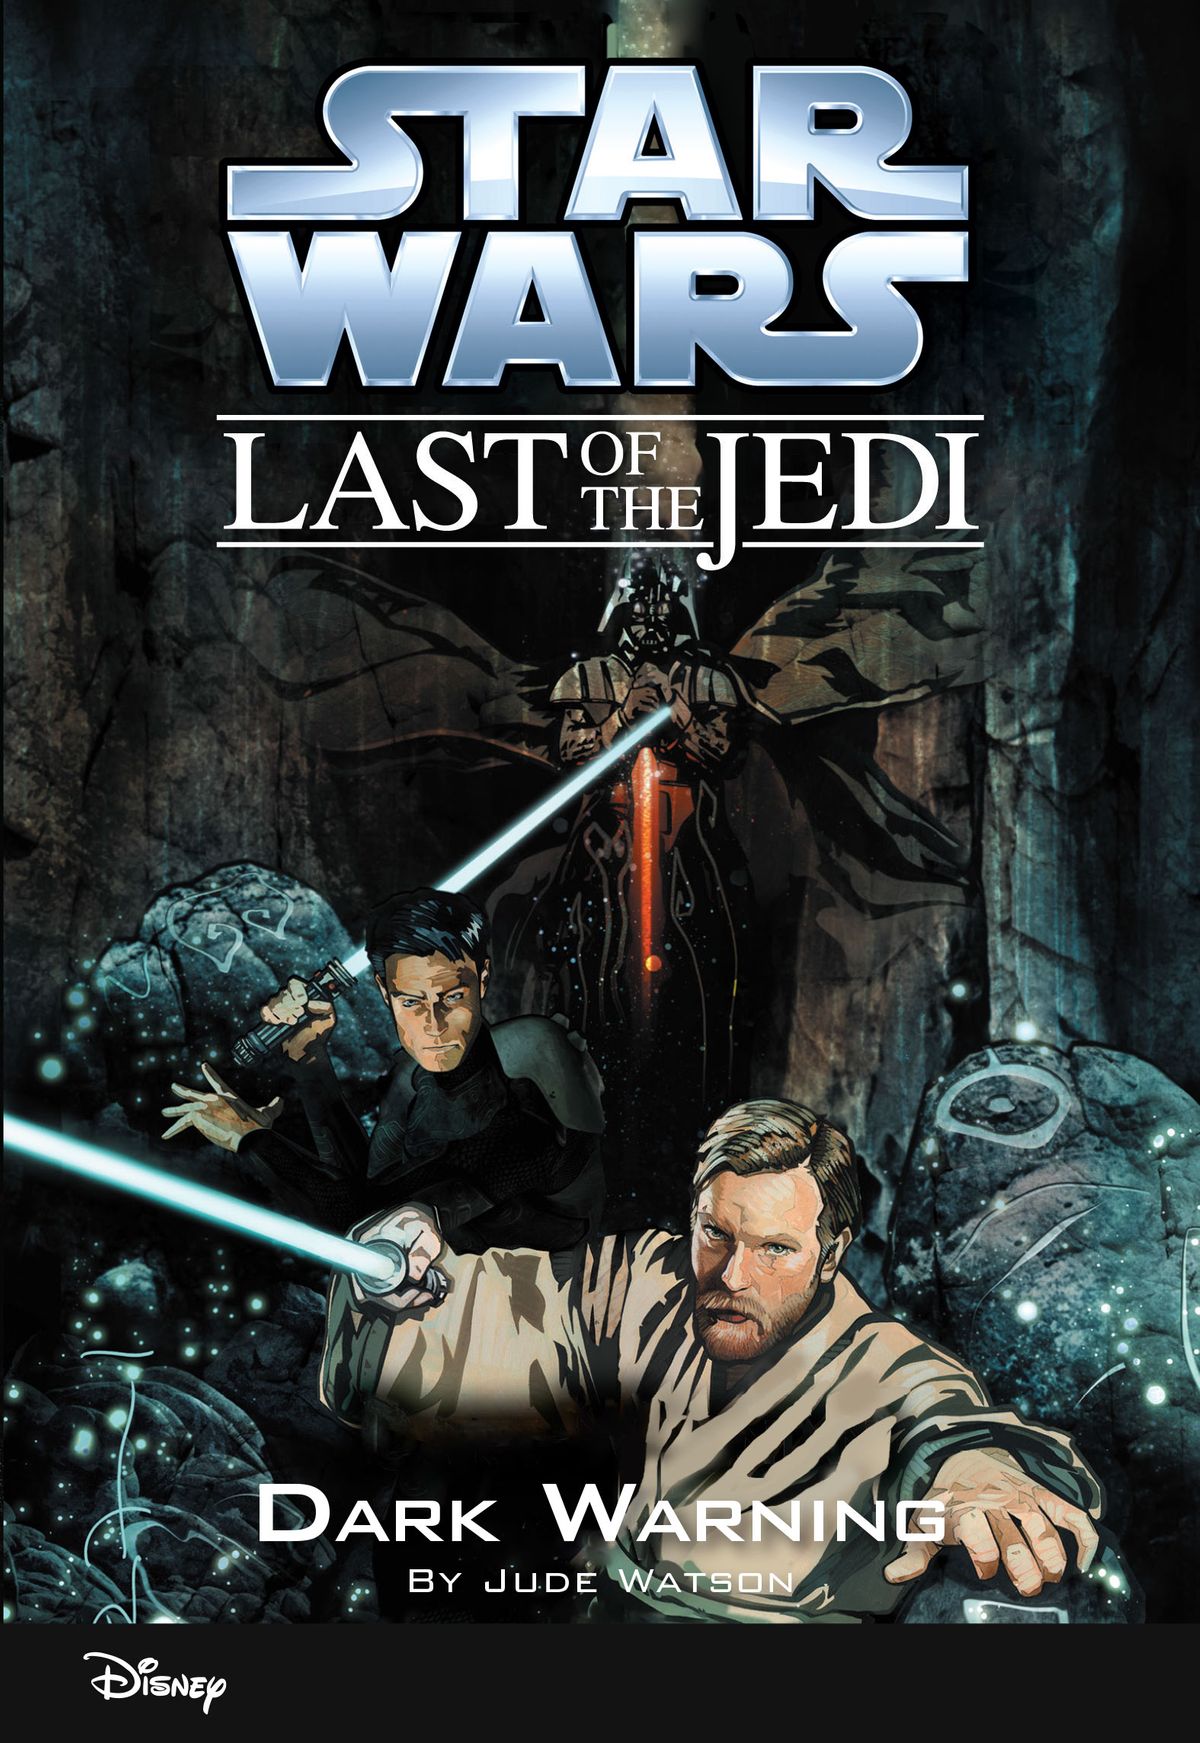 The Last of the Jedi: Dark Warning